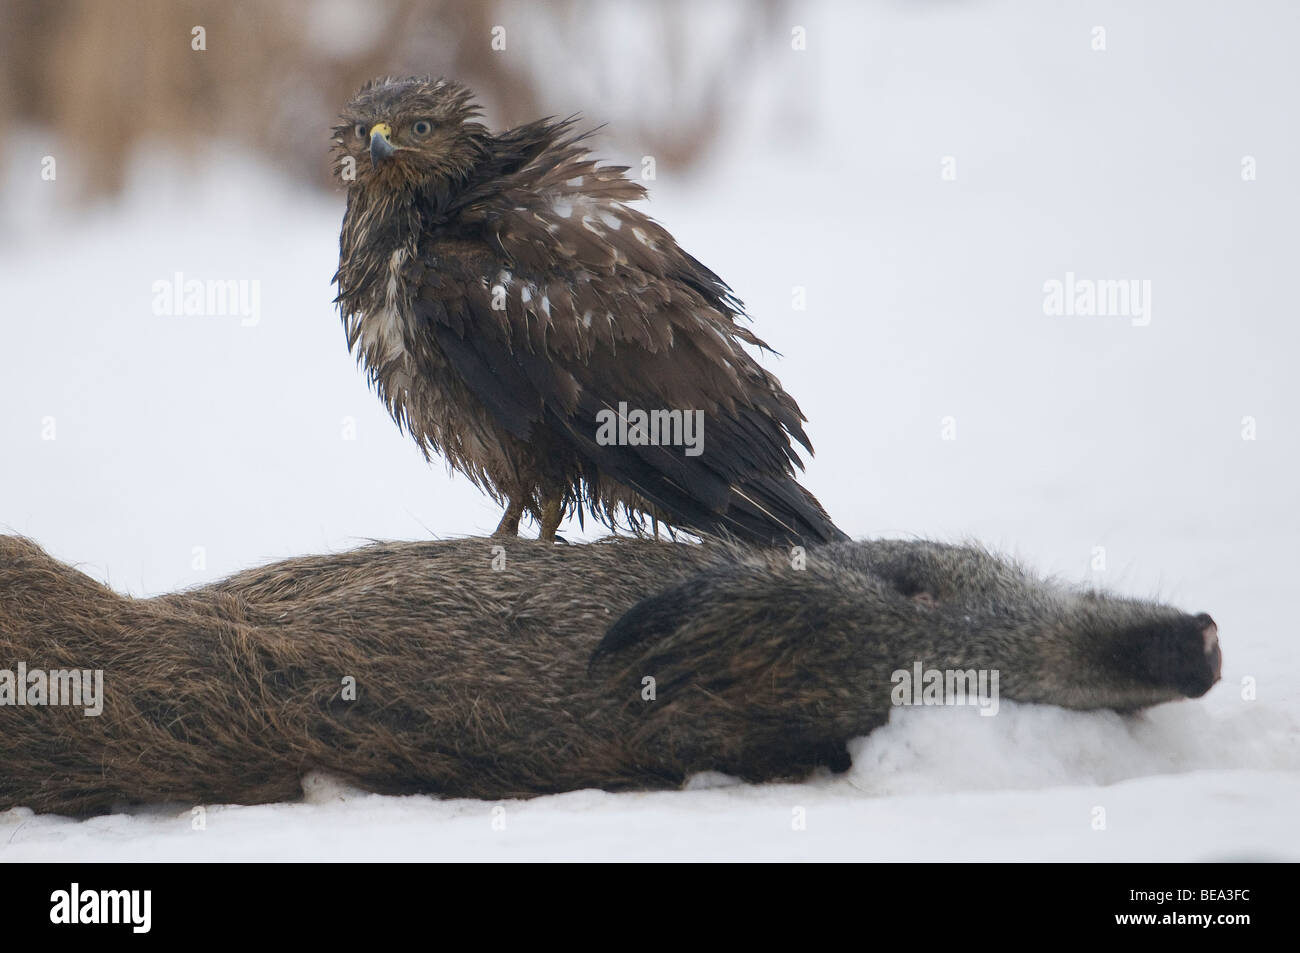 Buizerd zittend op een dood wild zwijn; Eurasian buzzard sitting an a dead wild boar Stock Photo